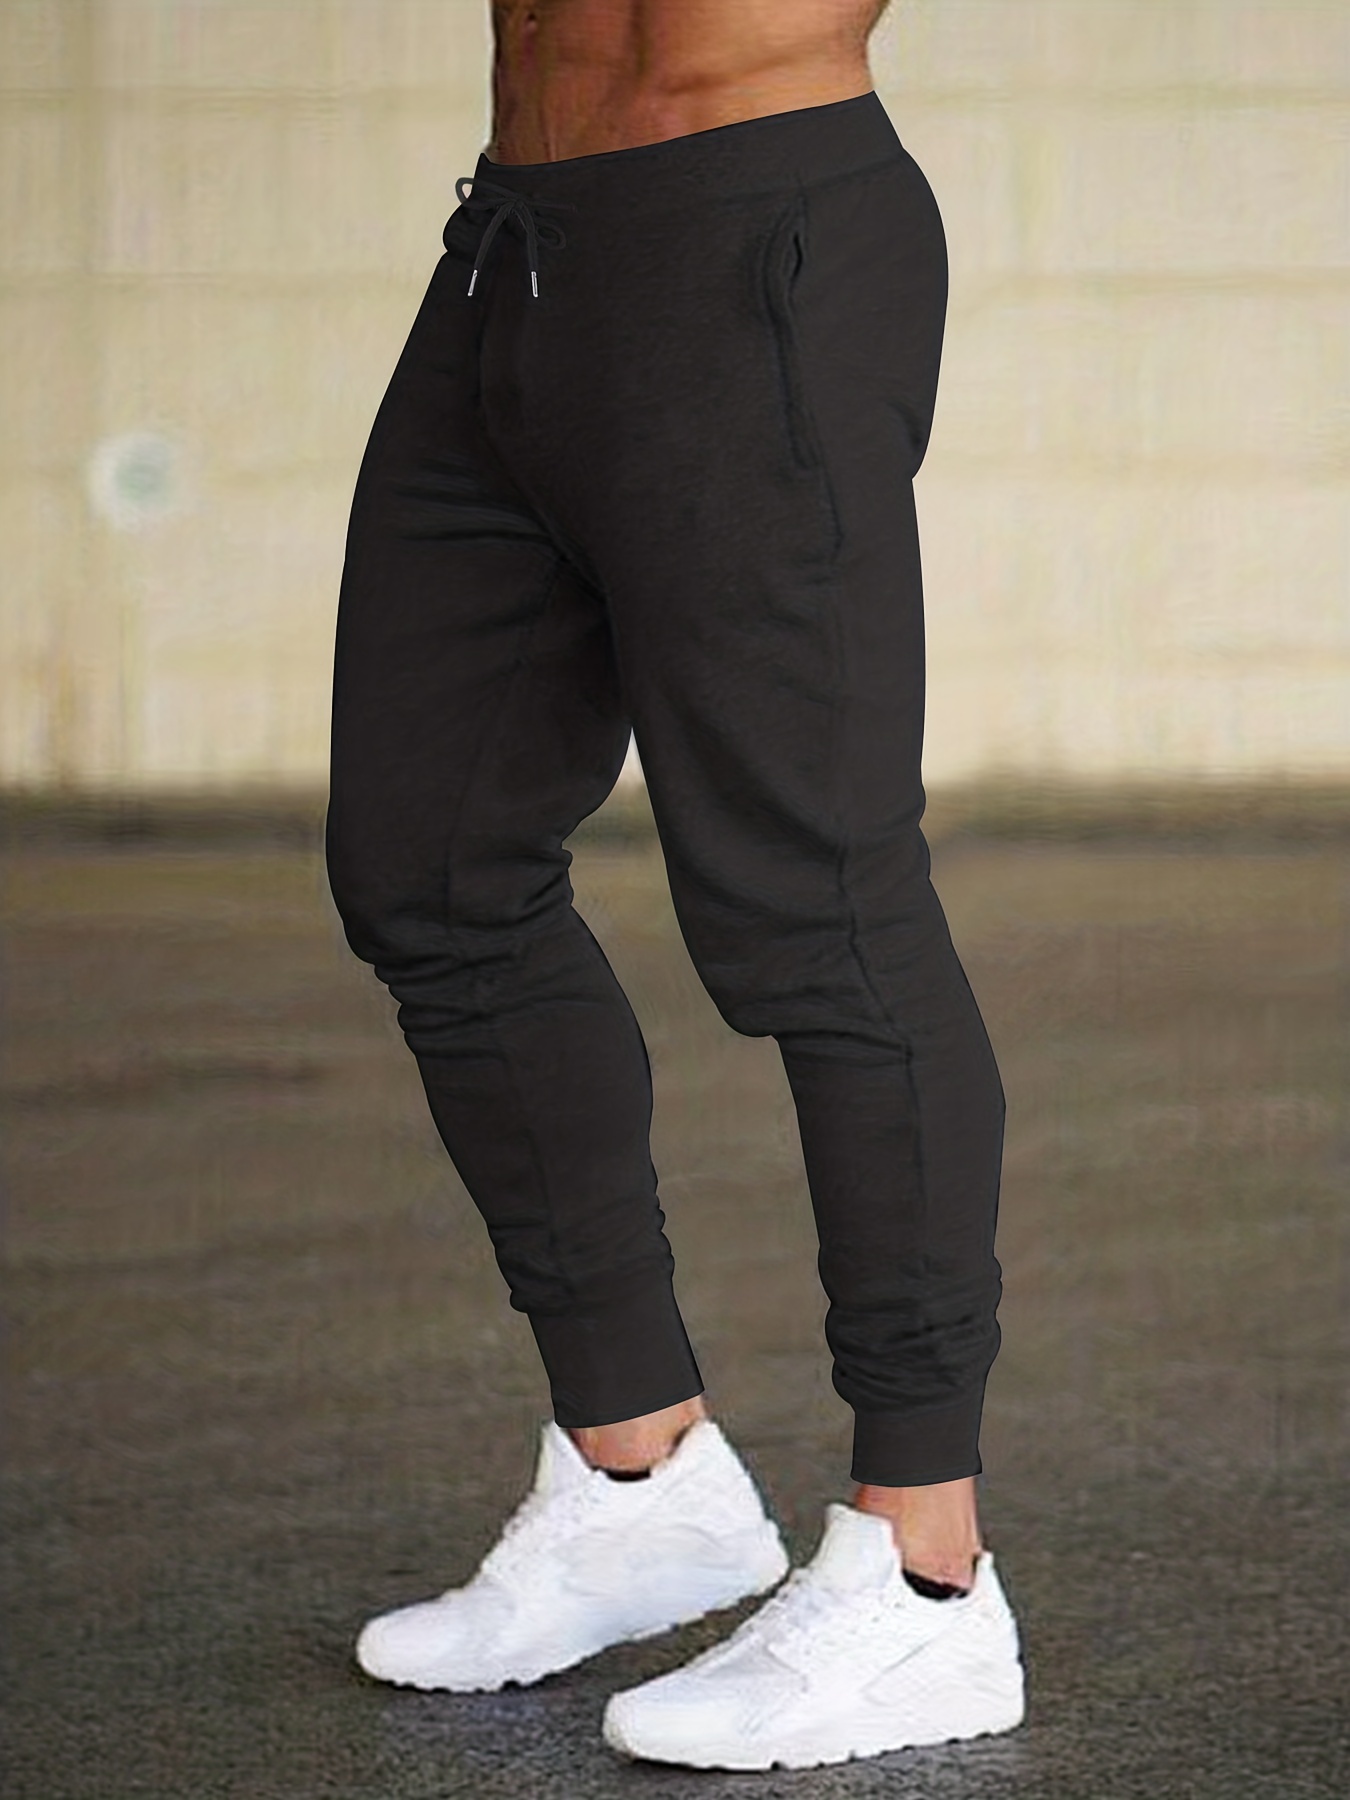 Men's Stretch Casual Sports Pants Black